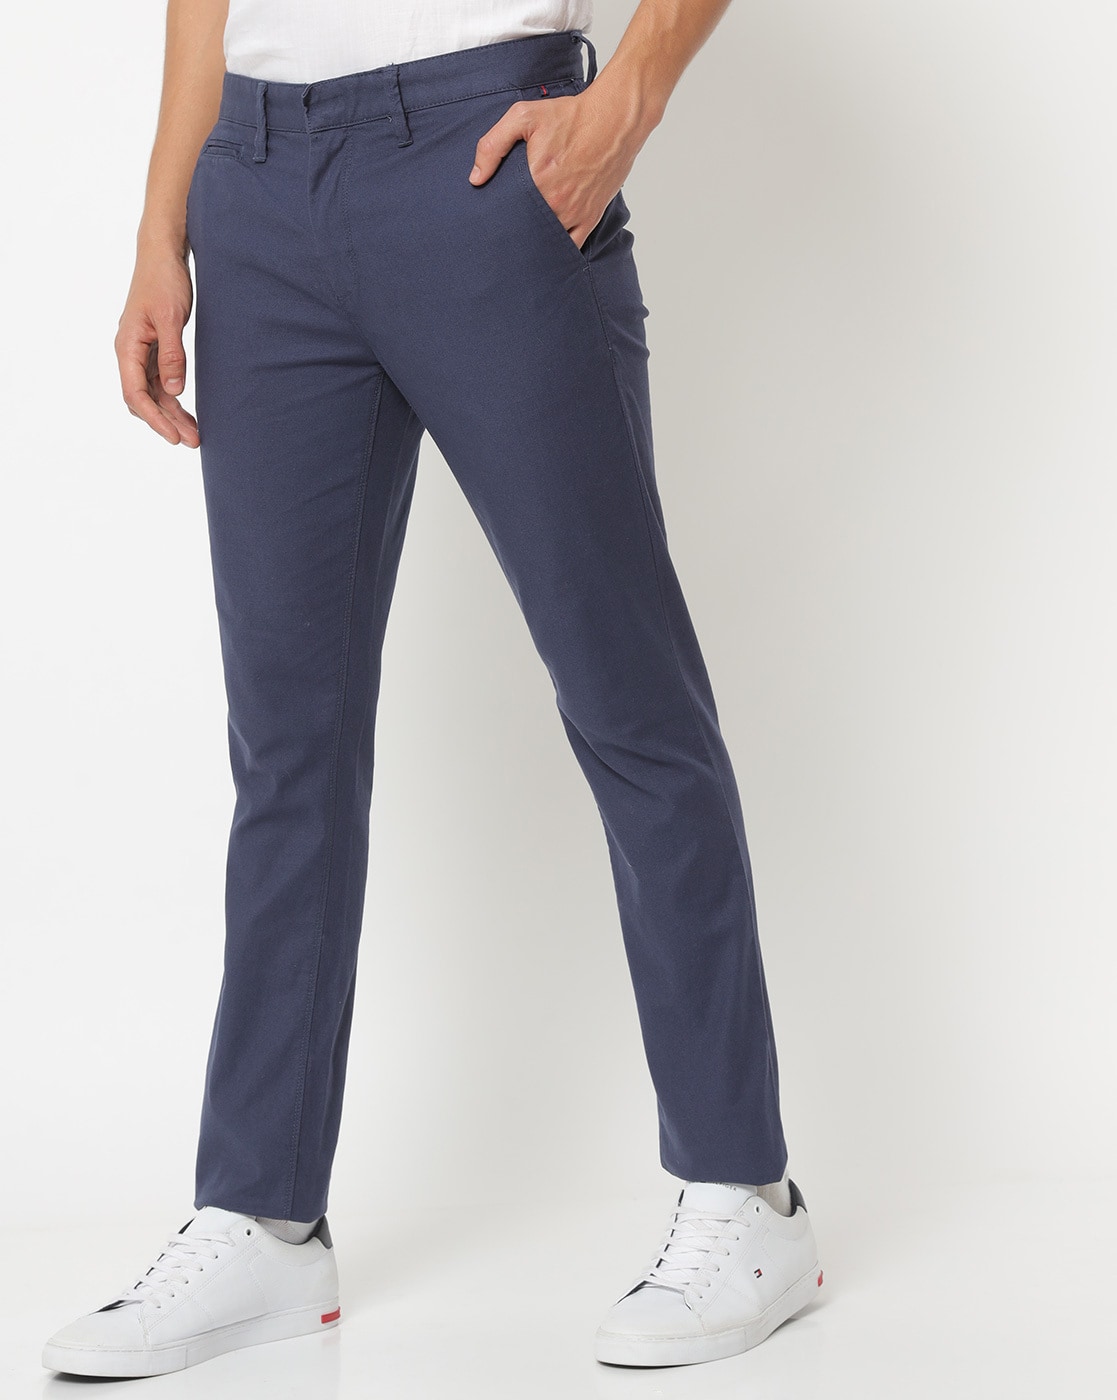 Buy Navy Trousers  Pants for Men by JEAN CAFÉ Online  Ajiocom